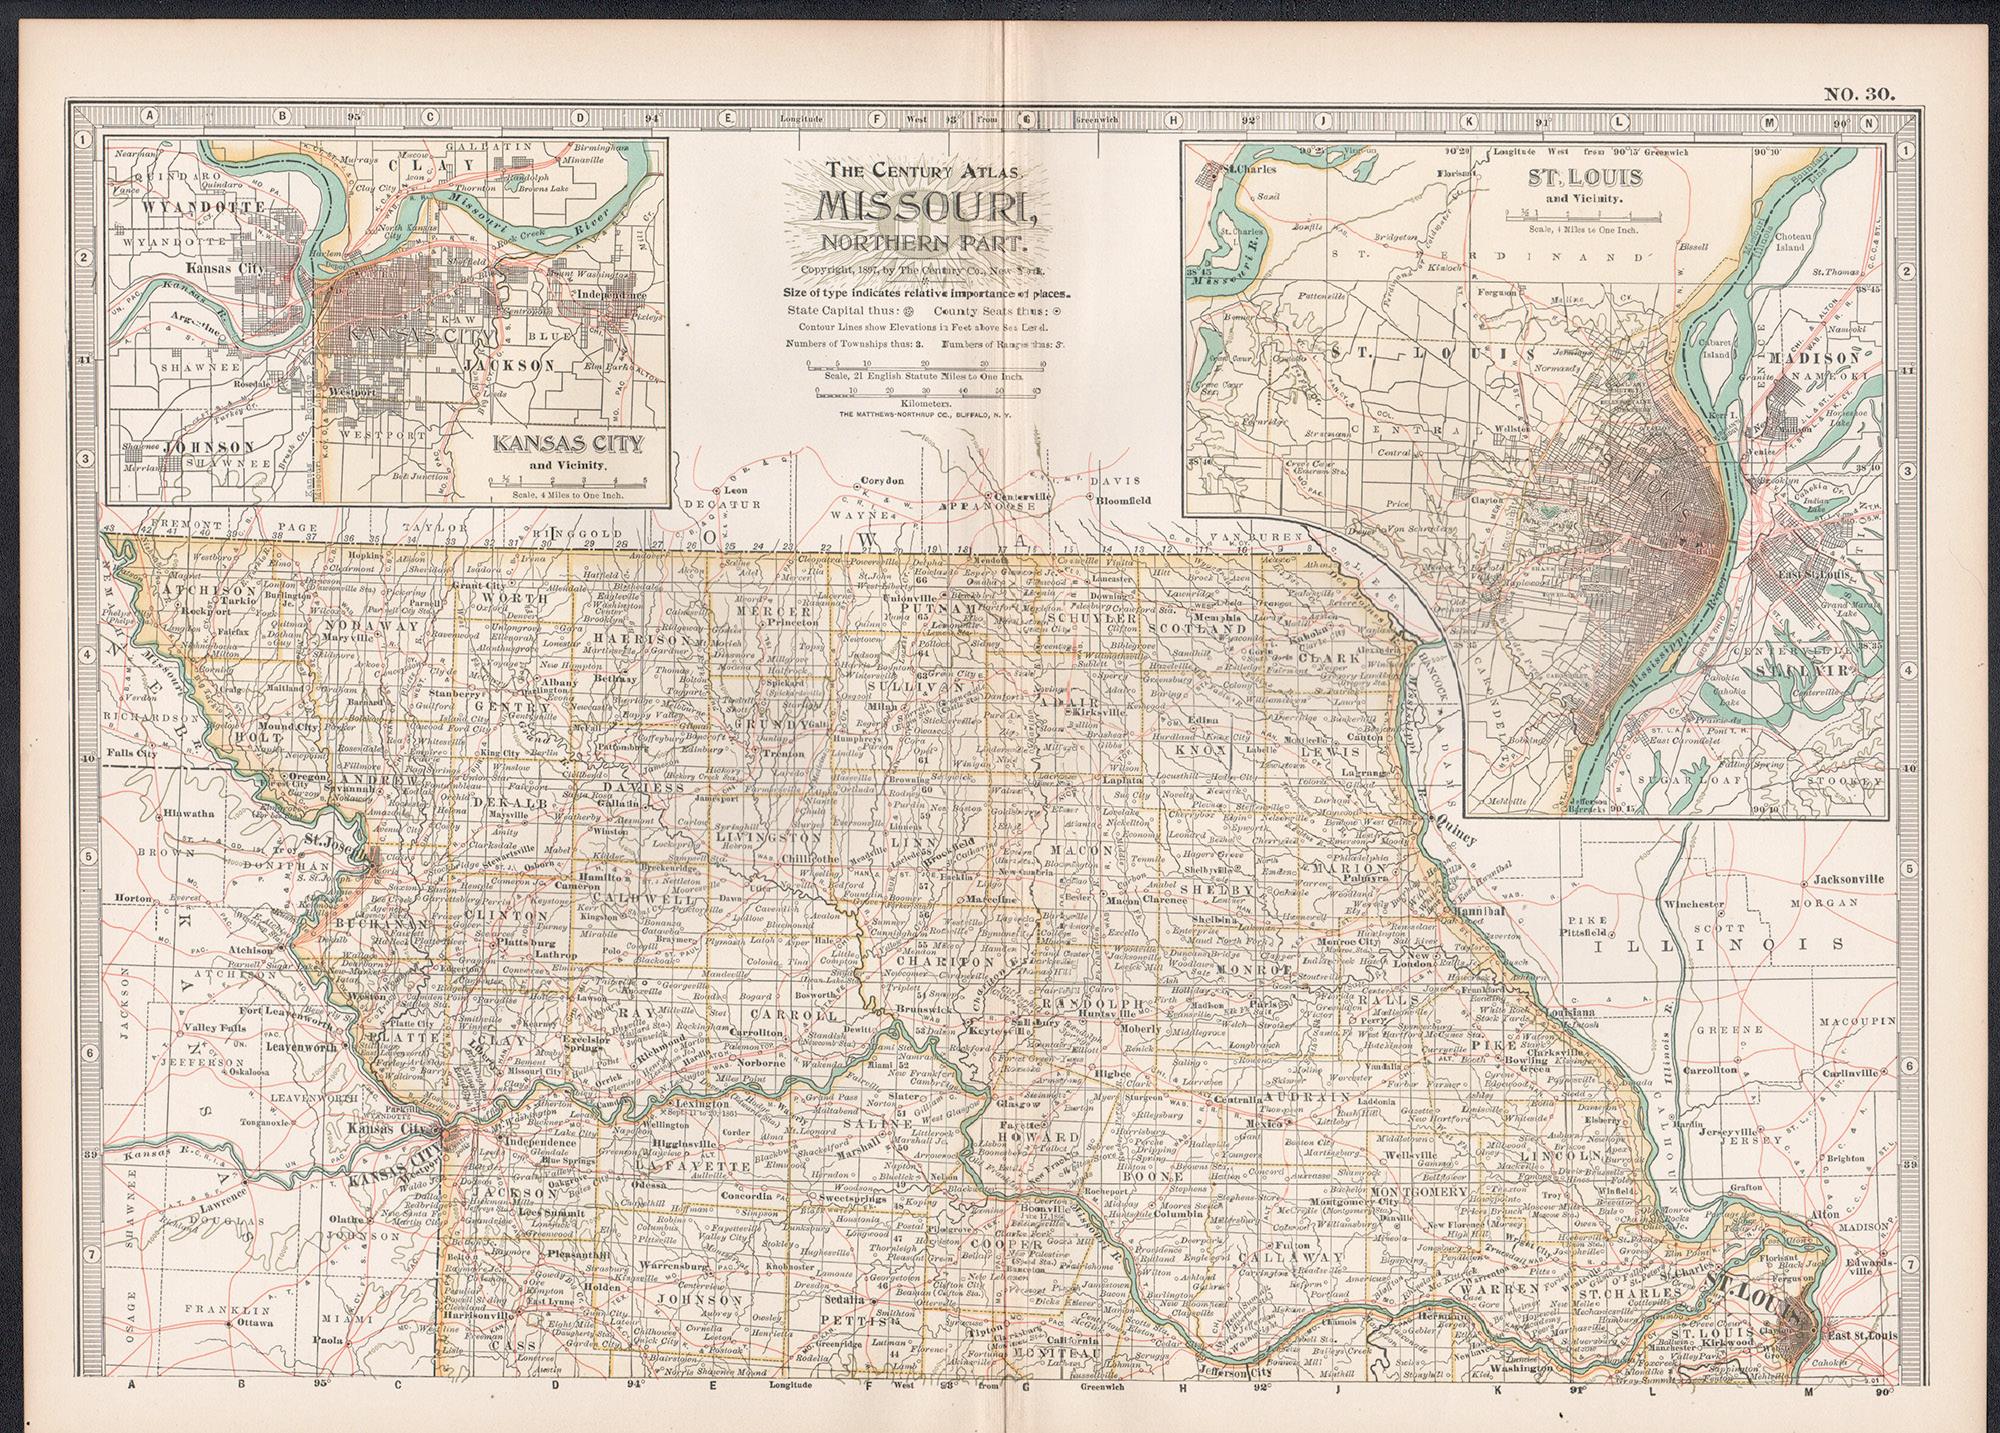 Missouri. Northern Part. USA. Century Atlas state antique vintage map - Print by Unknown